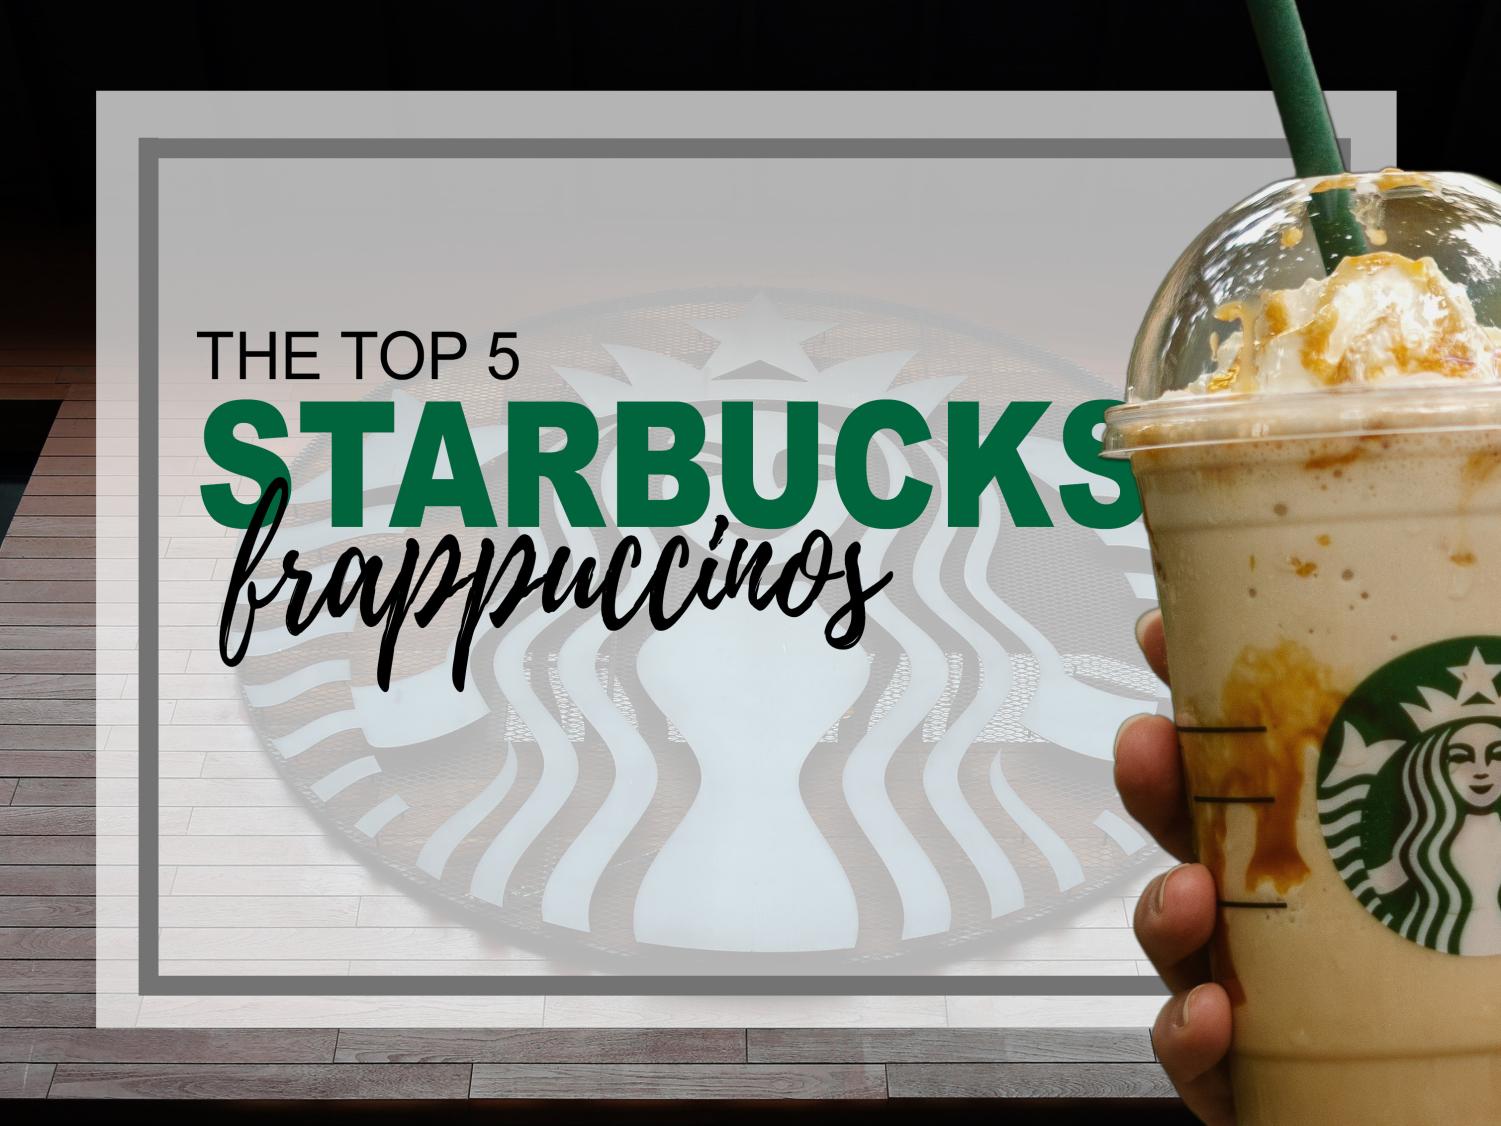 Mini Frappuccino is Back in Starbucks Stores